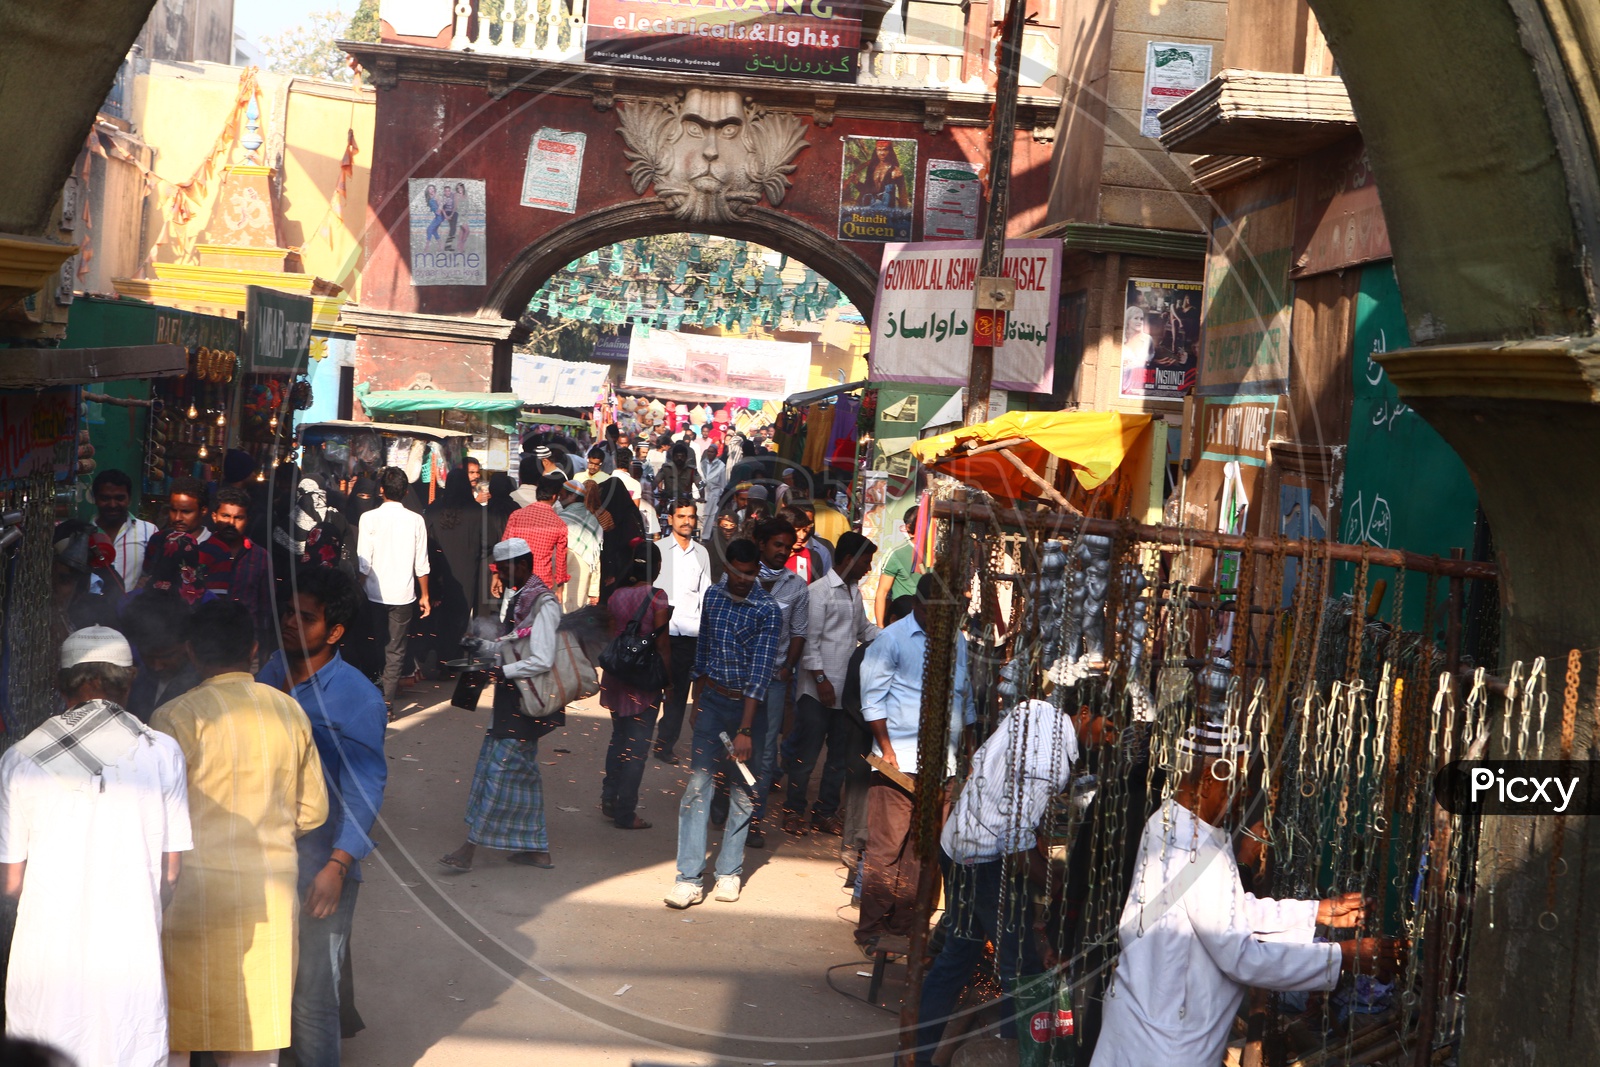 A Busy Vendor Street